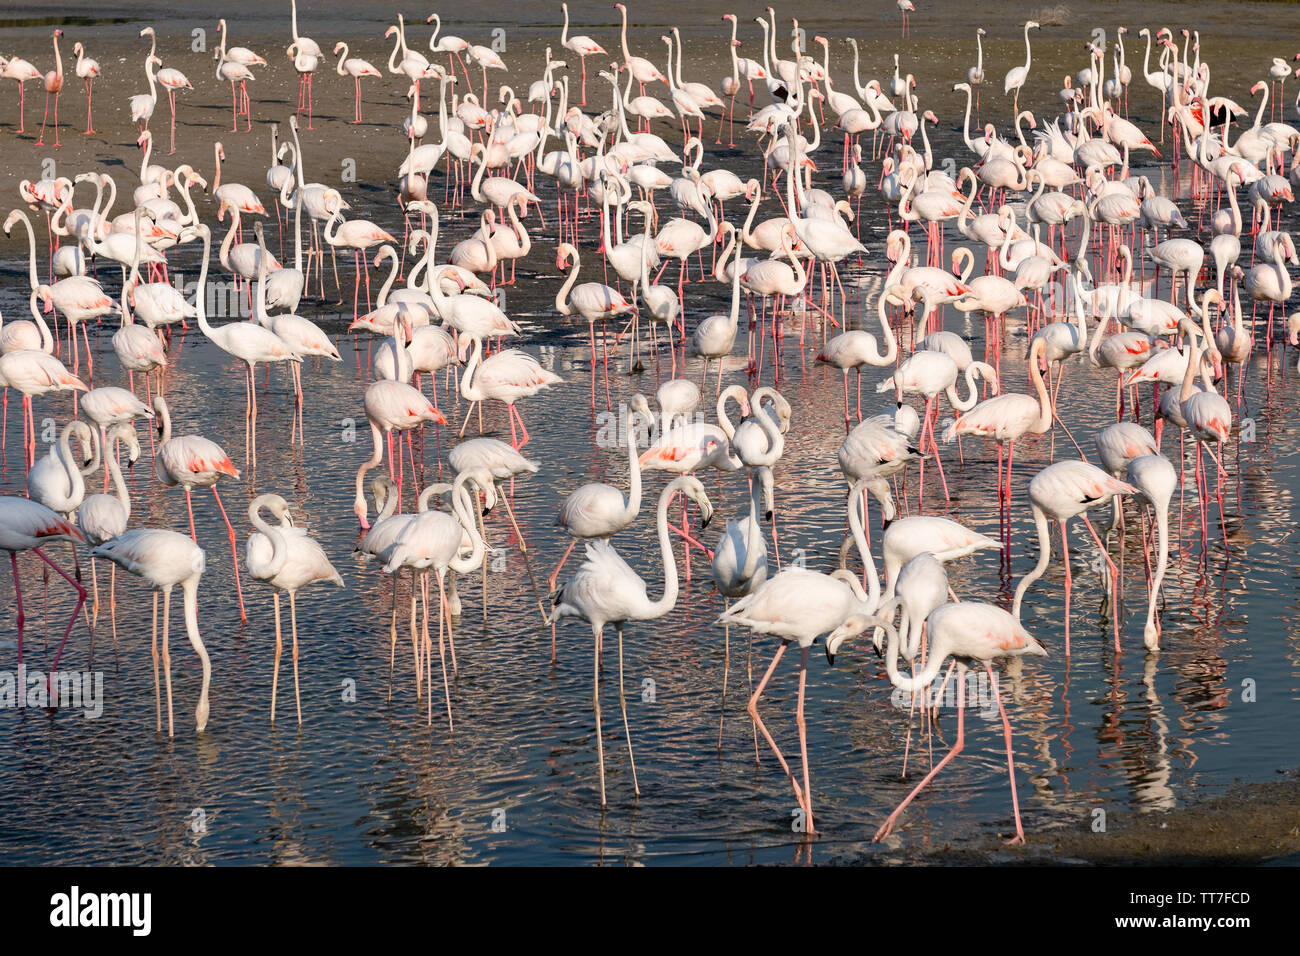 Flamingo dubai hi-res stock photography and images - Alamy